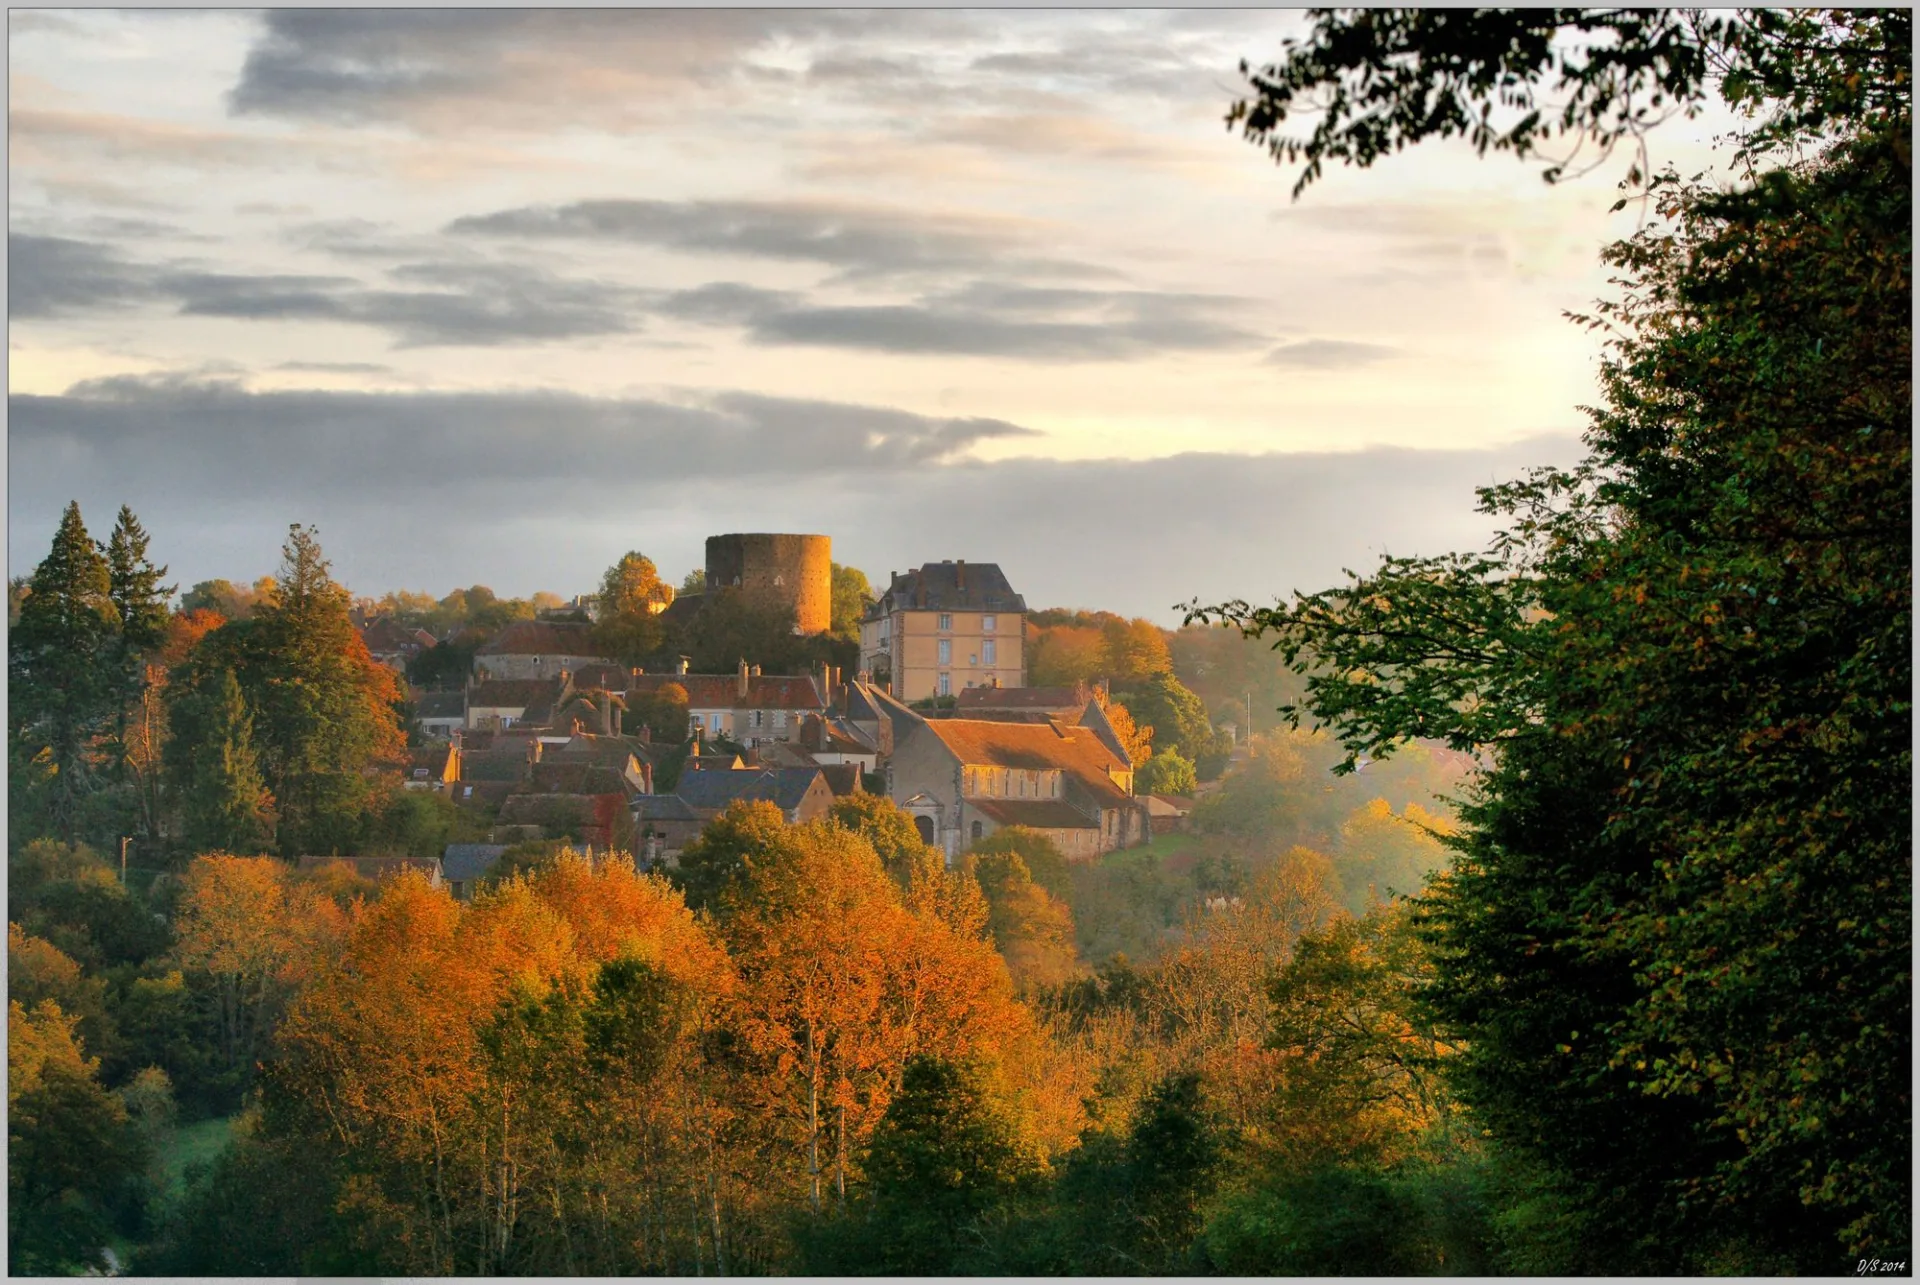 Village of Saint-Sauveur-en-Puisaye in the fall